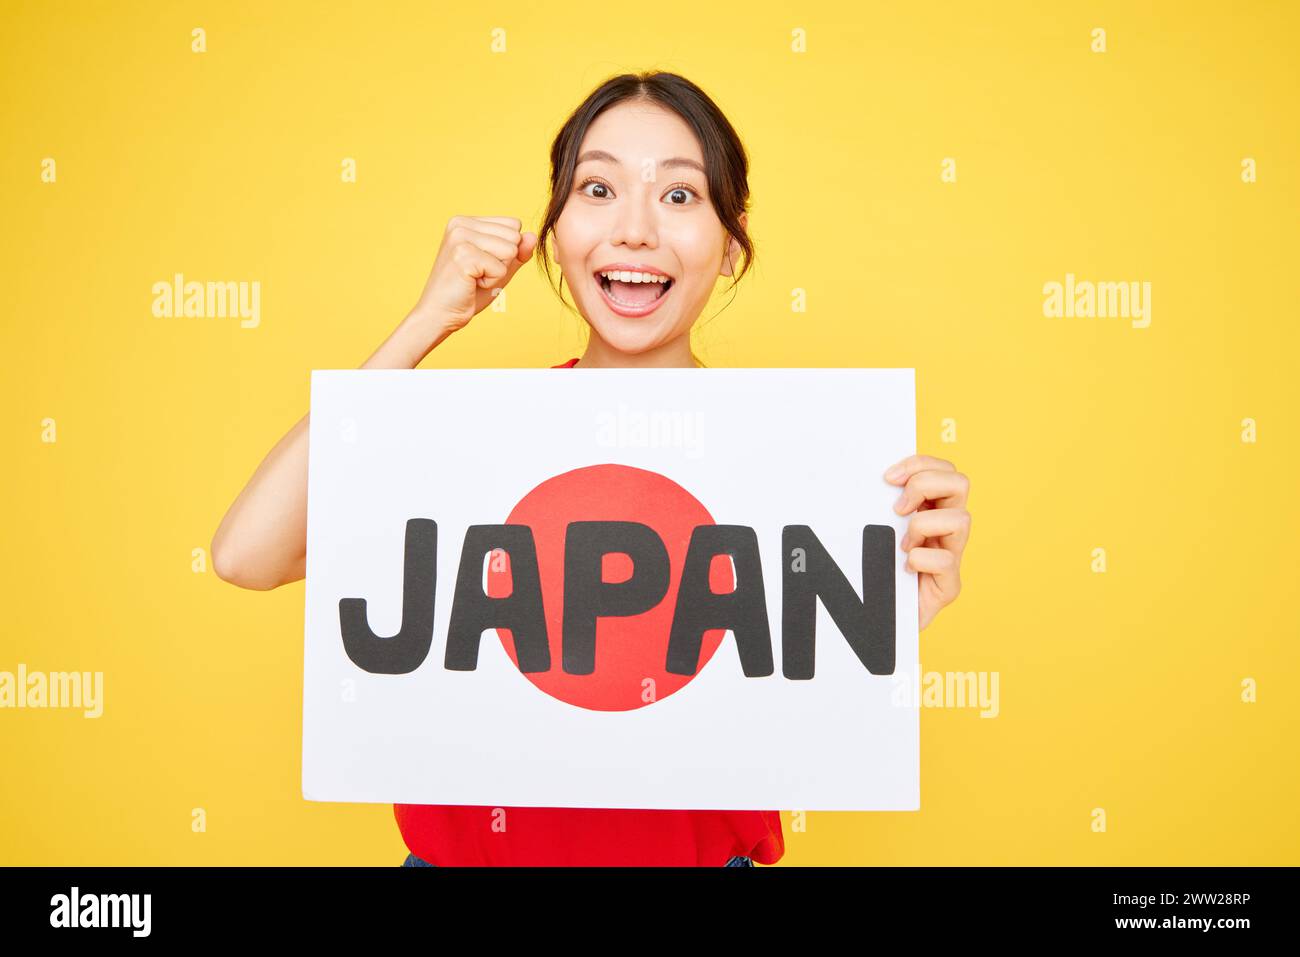 Asian woman holding Japan sign Stock Photo